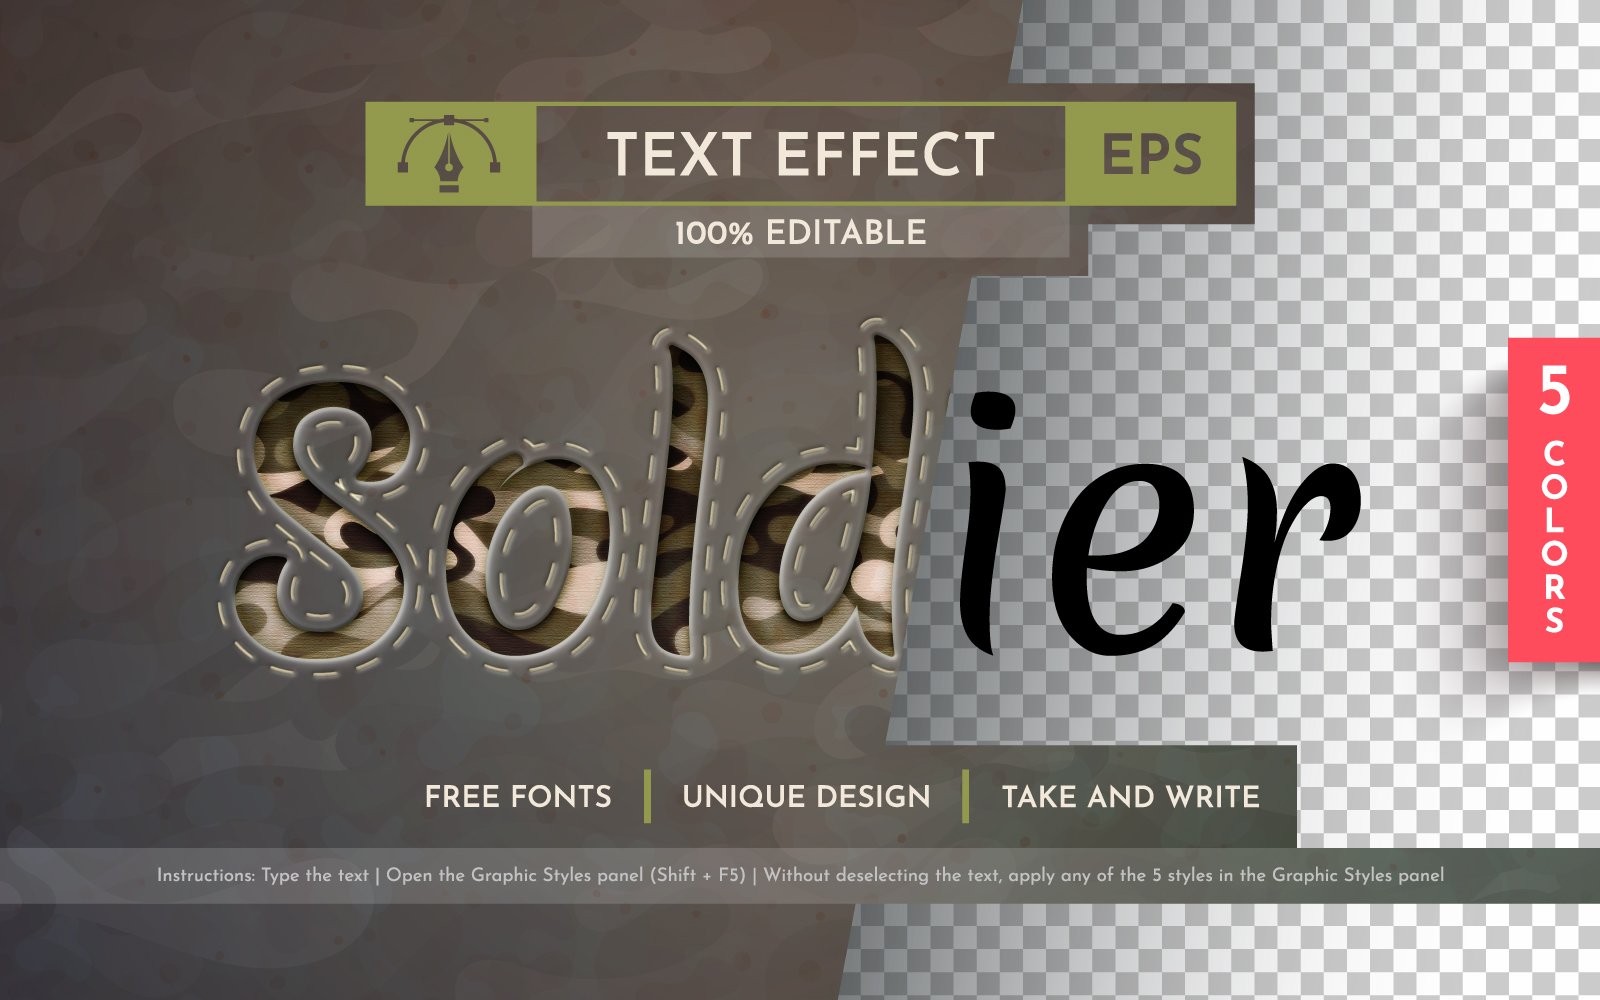 Template #401281 Text Effect Webdesign Template - Logo template Preview